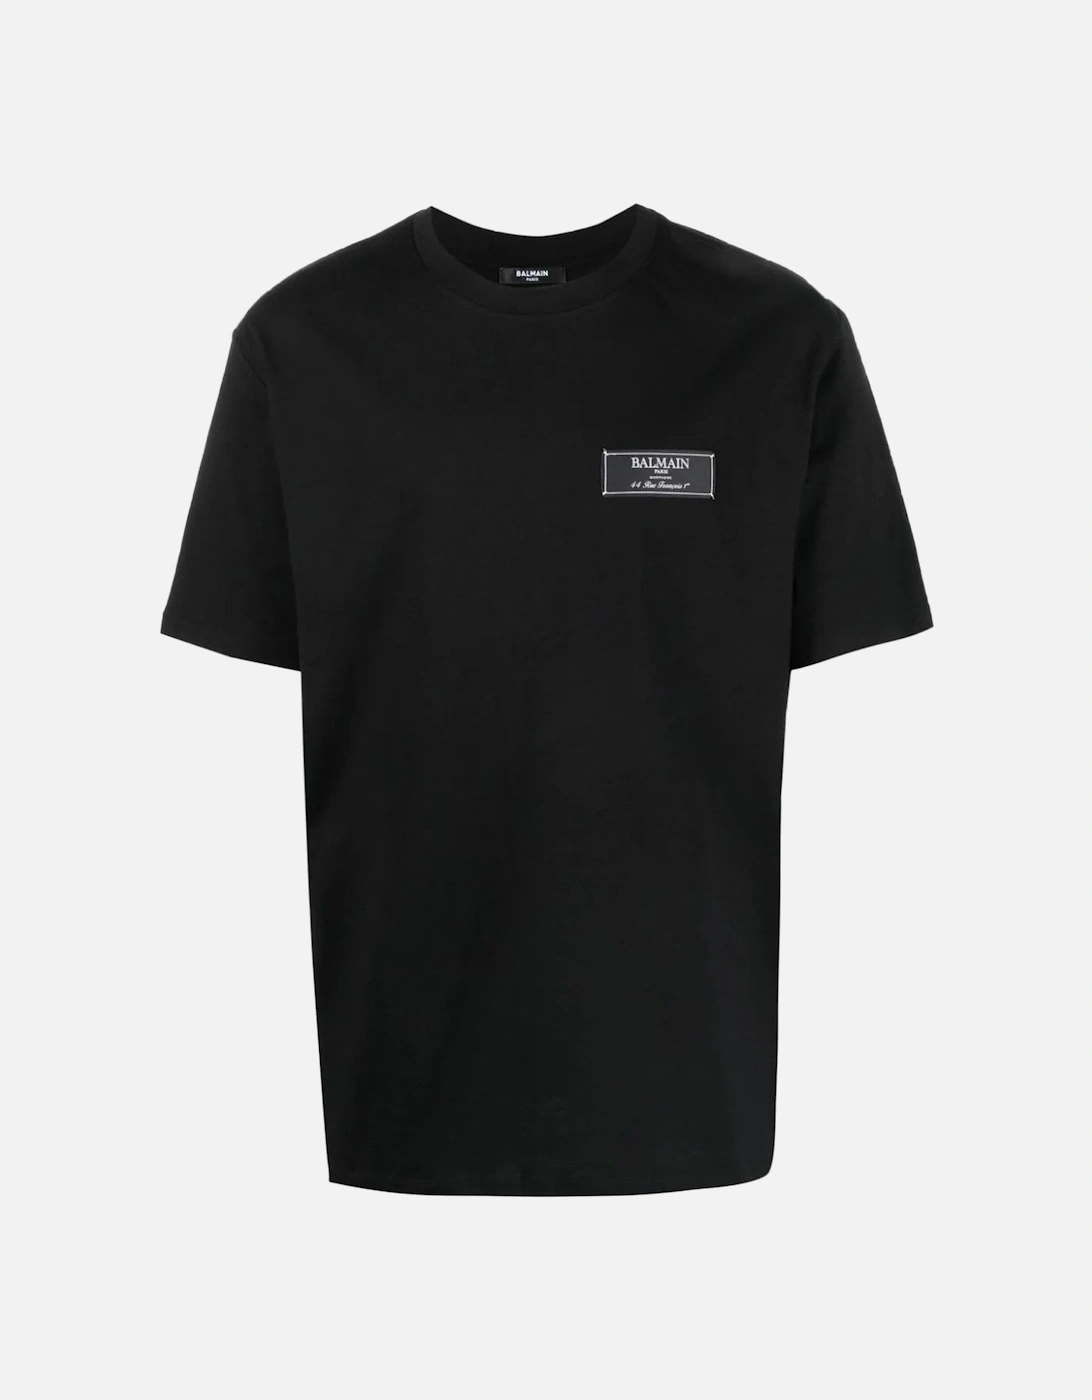 Pierre Label T-shirt Black, 7 of 6